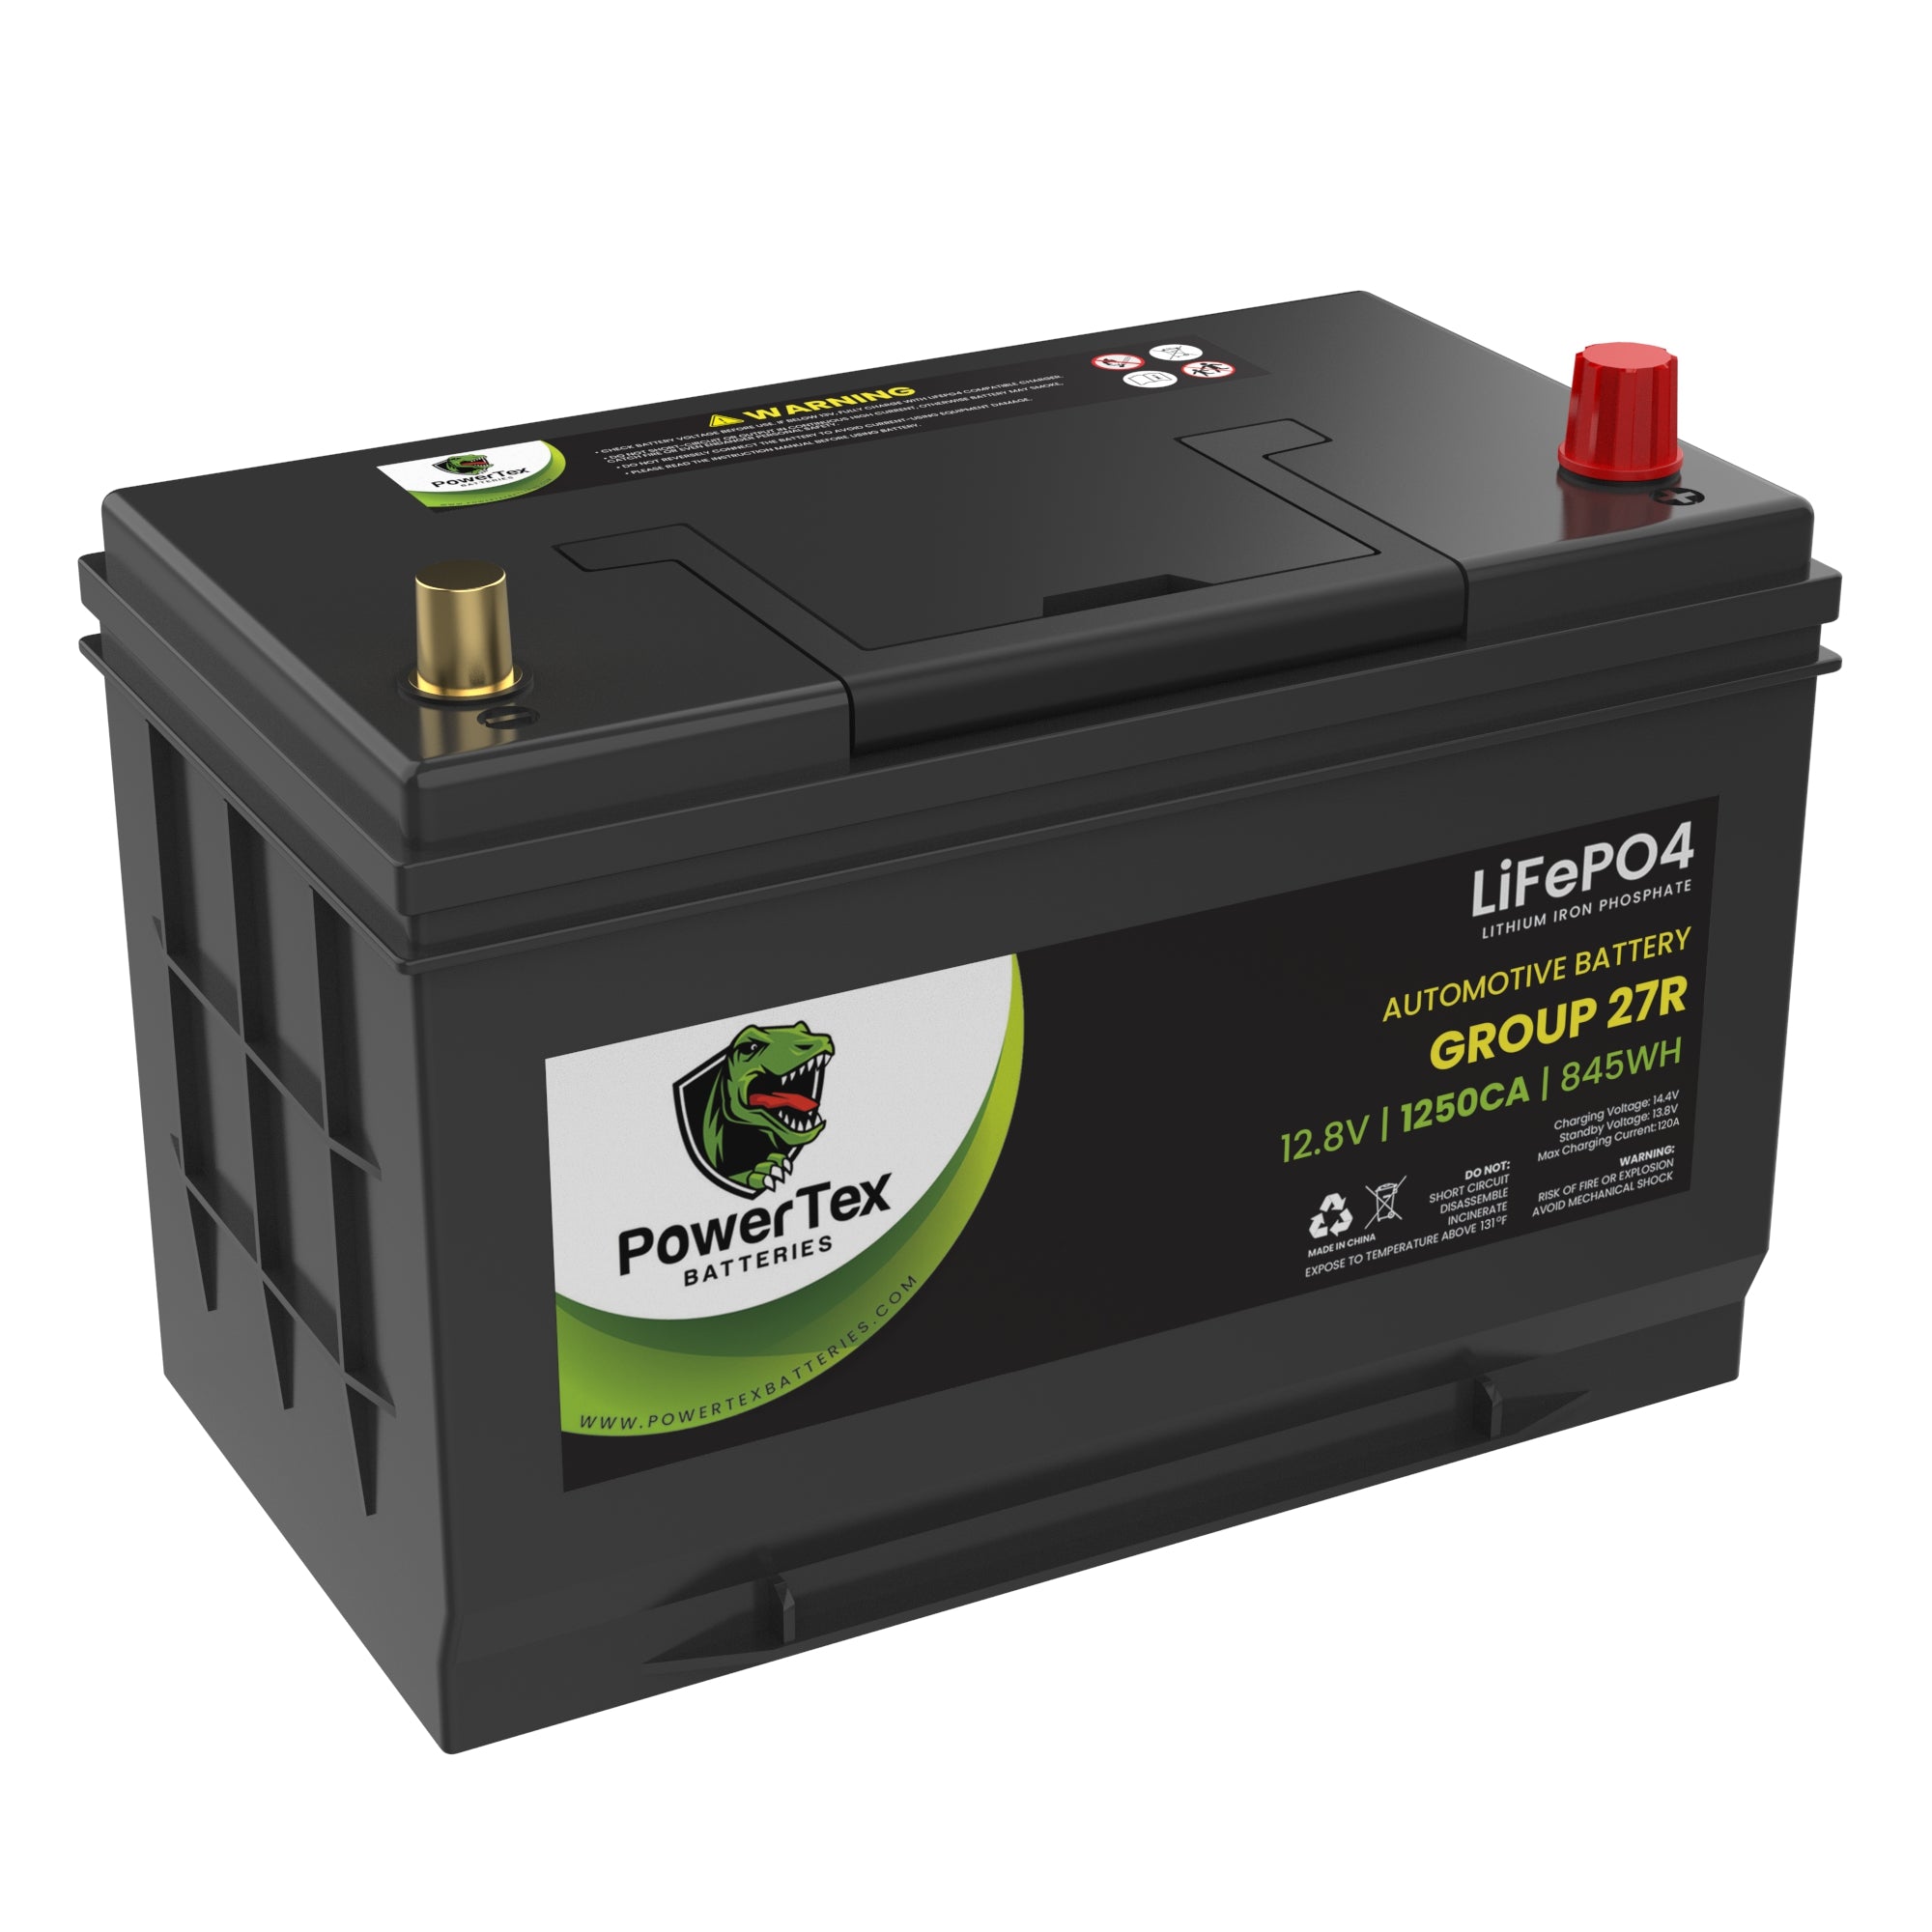 PowerTex Batteries BCI Group 27R Lithium LiFePO4 Automotive Battery